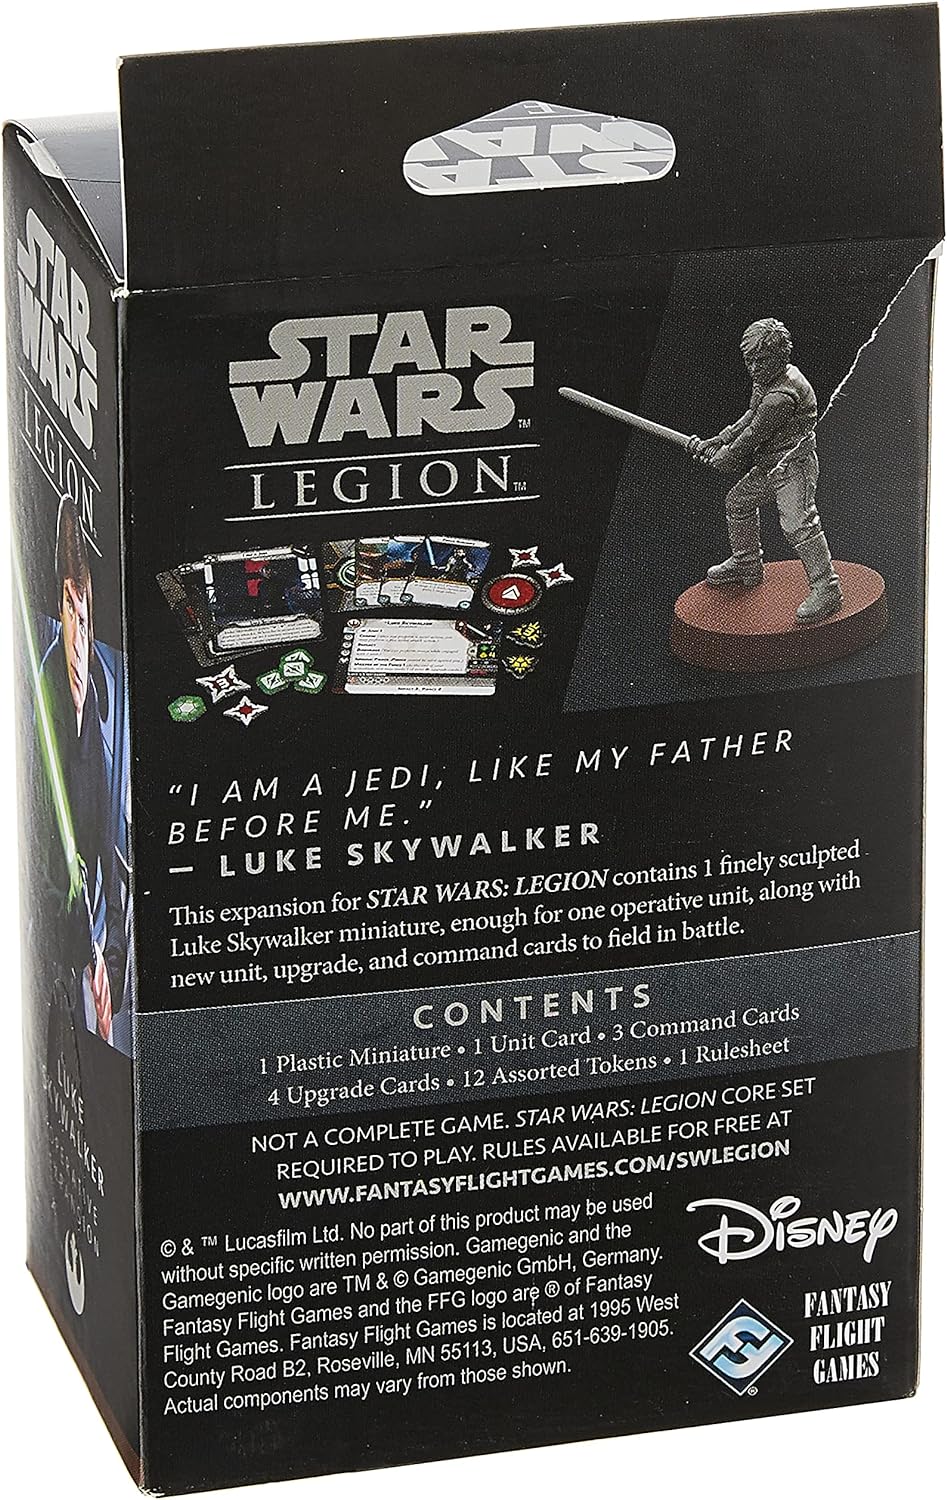 Star Wars Legion: Rebel Expansions: Luke Skywalker Operative